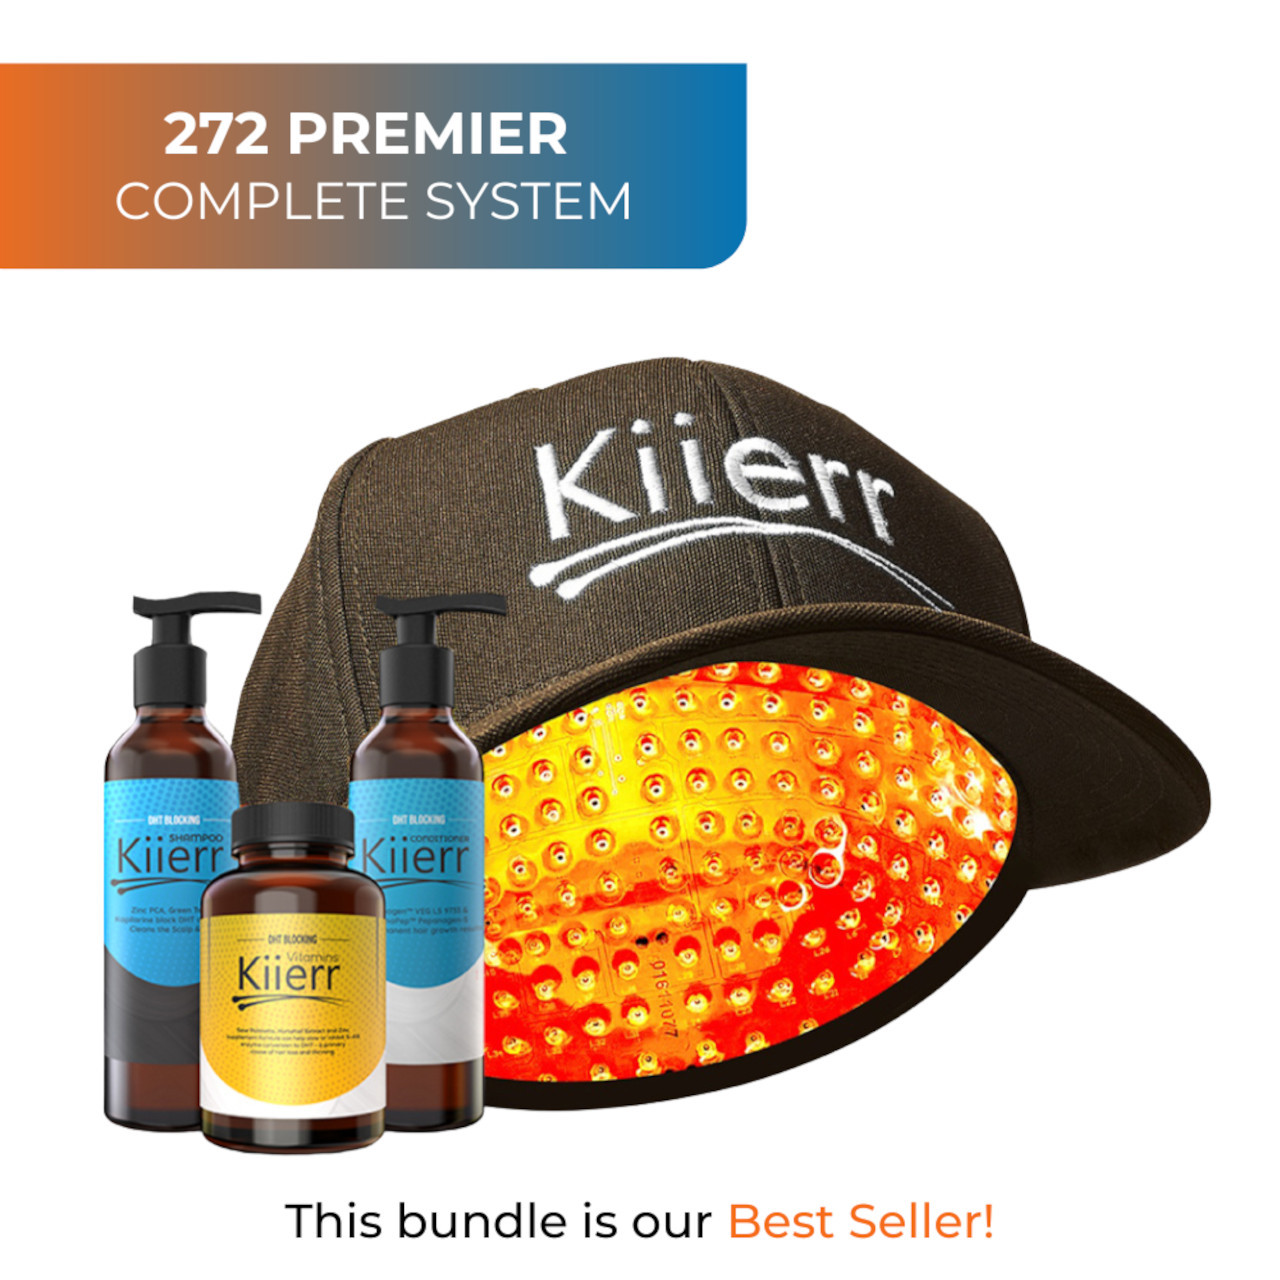 Kiierr Laser Cap 272 Premier Complete System